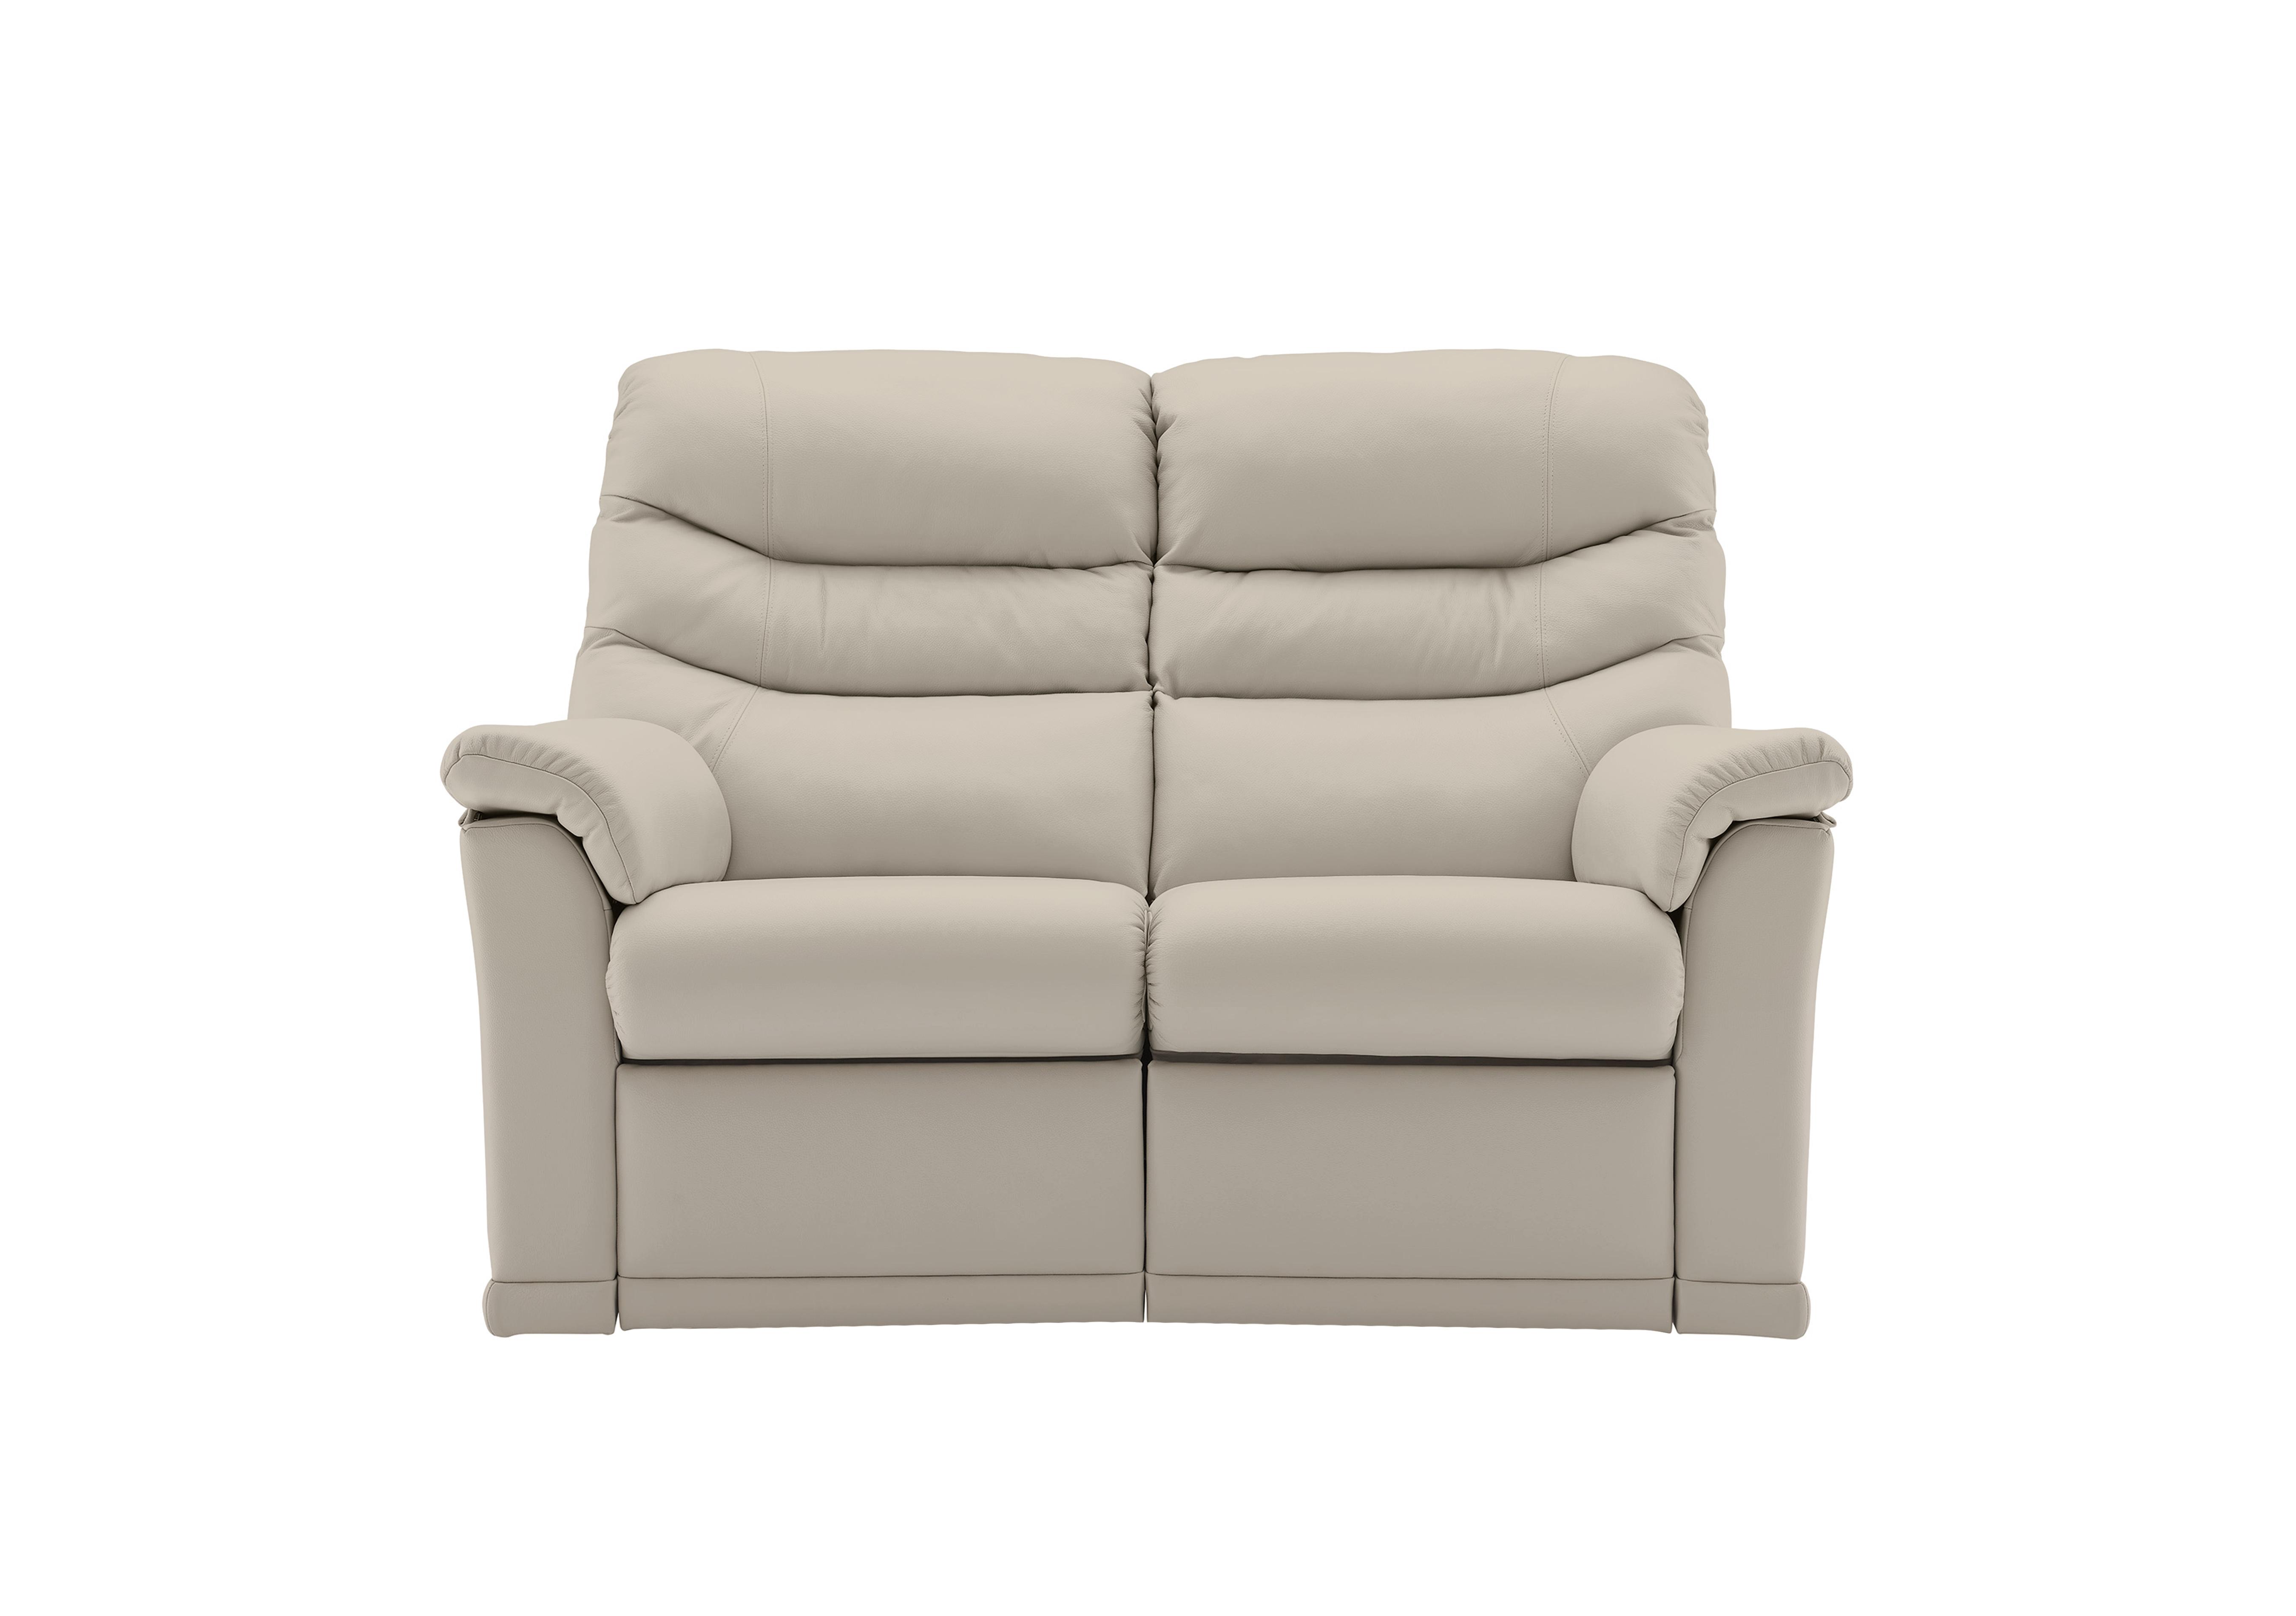 Malvern 2 Seater Leather Sofa in P219 Capri Putty on Furniture Village